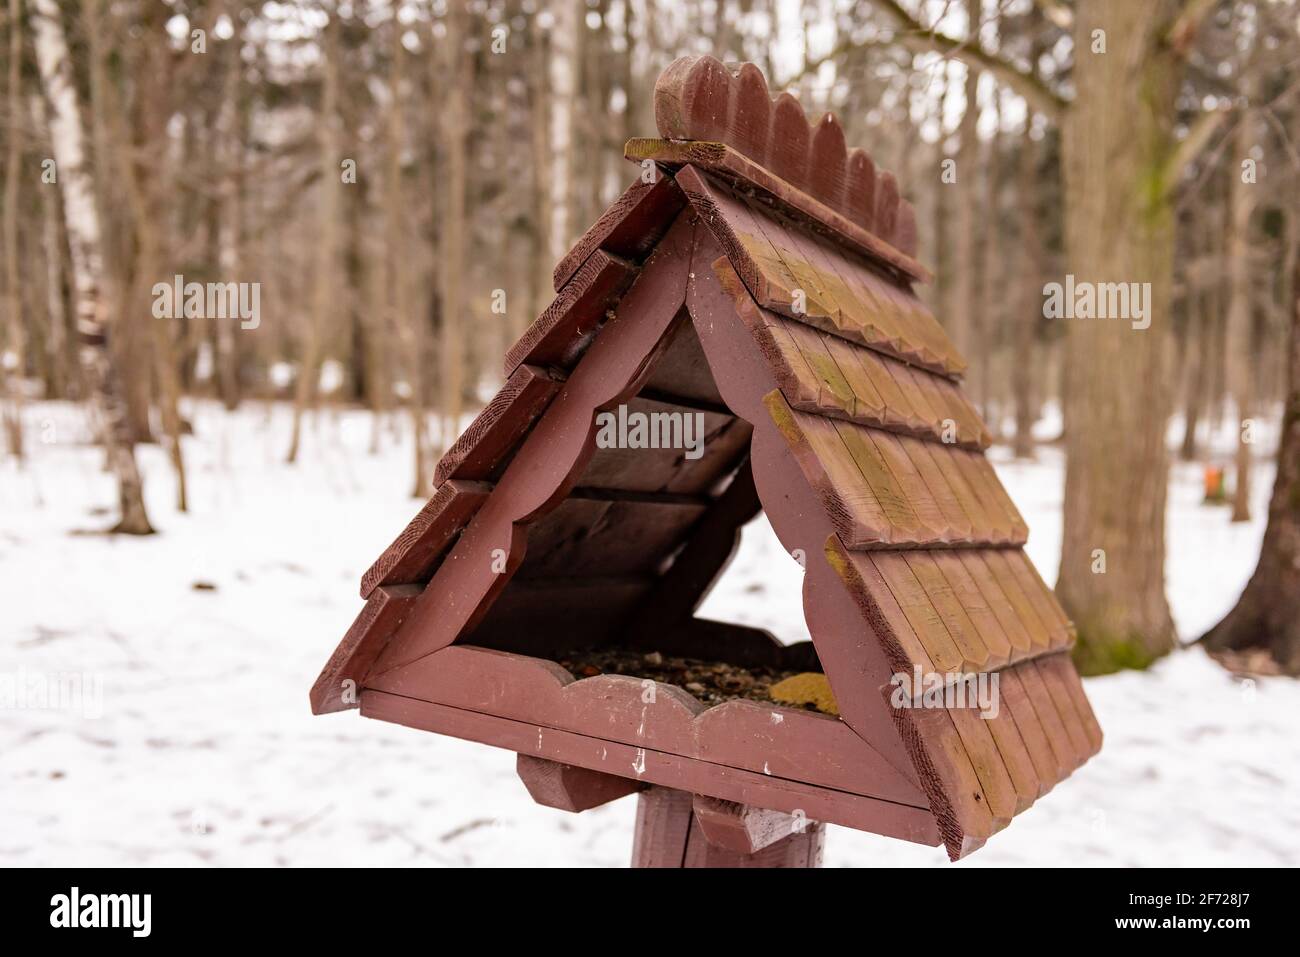 Bird feeder in the park. Bird feeder with wooden roof. Stock Photo